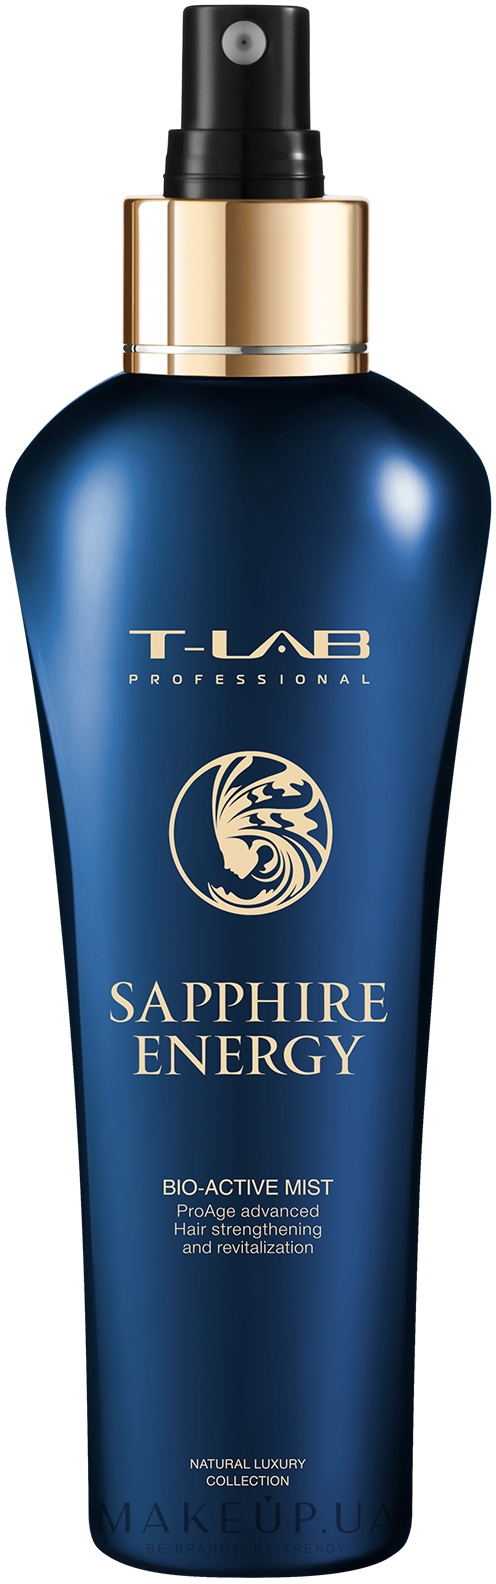 Спрей для силы и анти-эйдж эффекта волос - T-Lab Professional Sapphire Energy Bio-Active Mist — фото 150ml